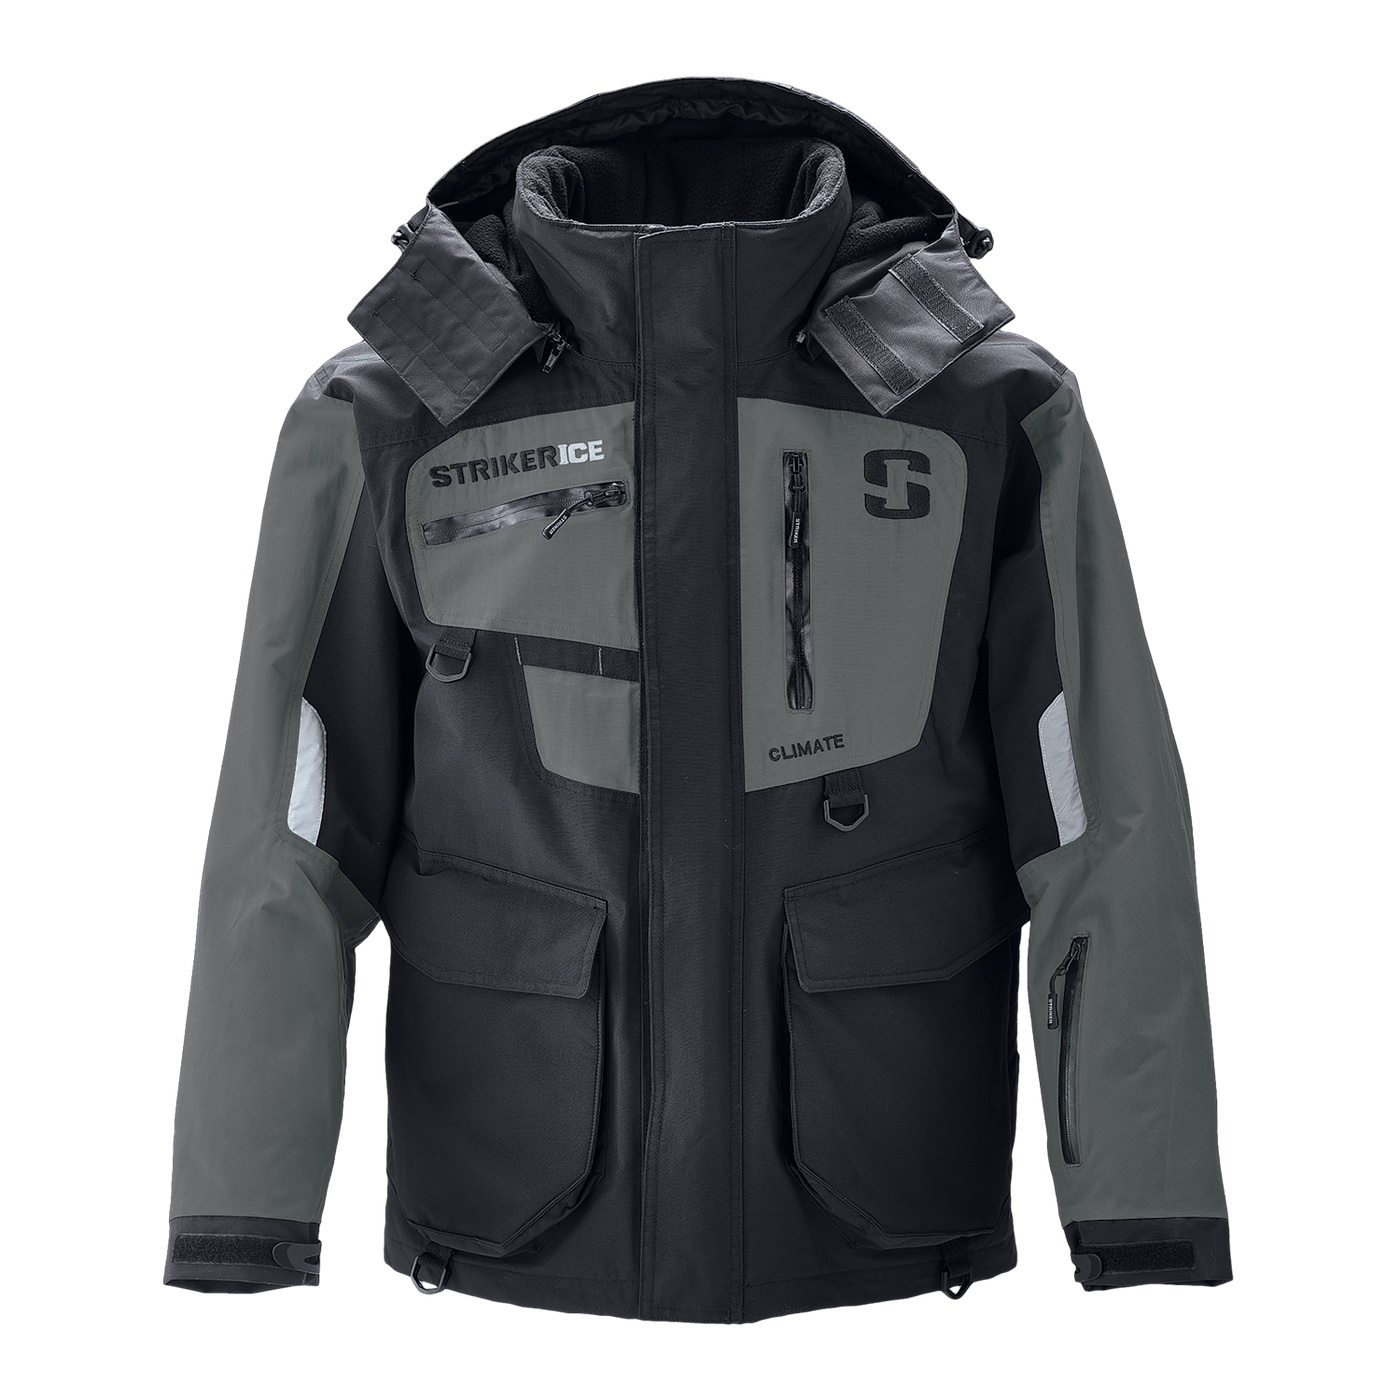 StrikerICE® Men's Climate Ice Fishing Jacket Clothing Striker Black/Gray 5XL 